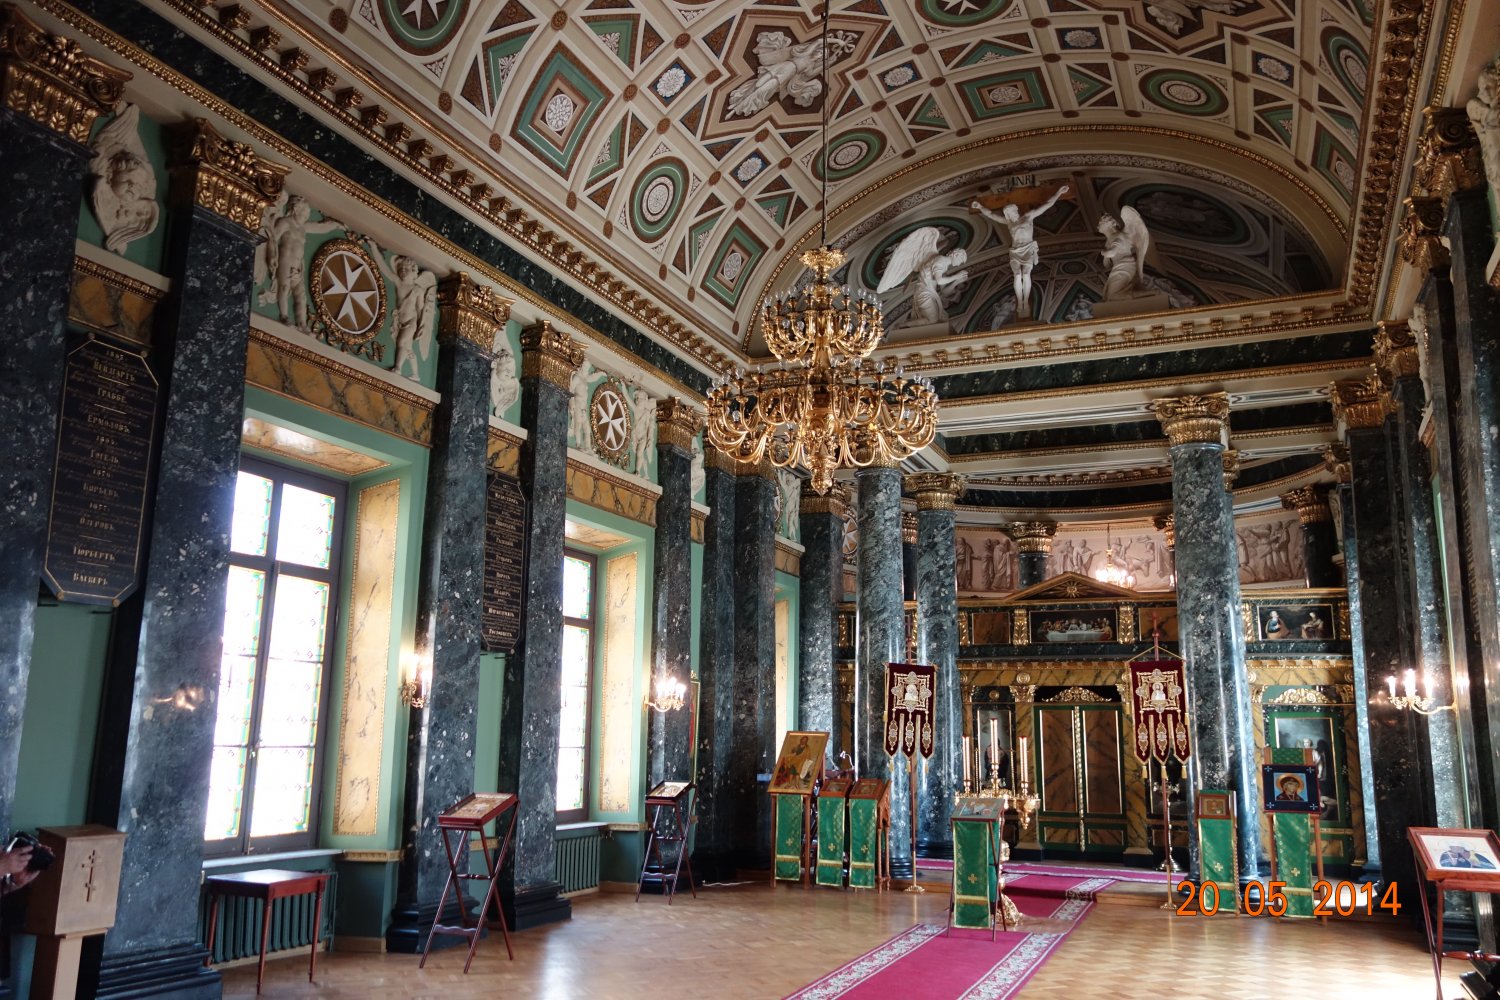 Воронцовский дворец в Санкт-Петербурге